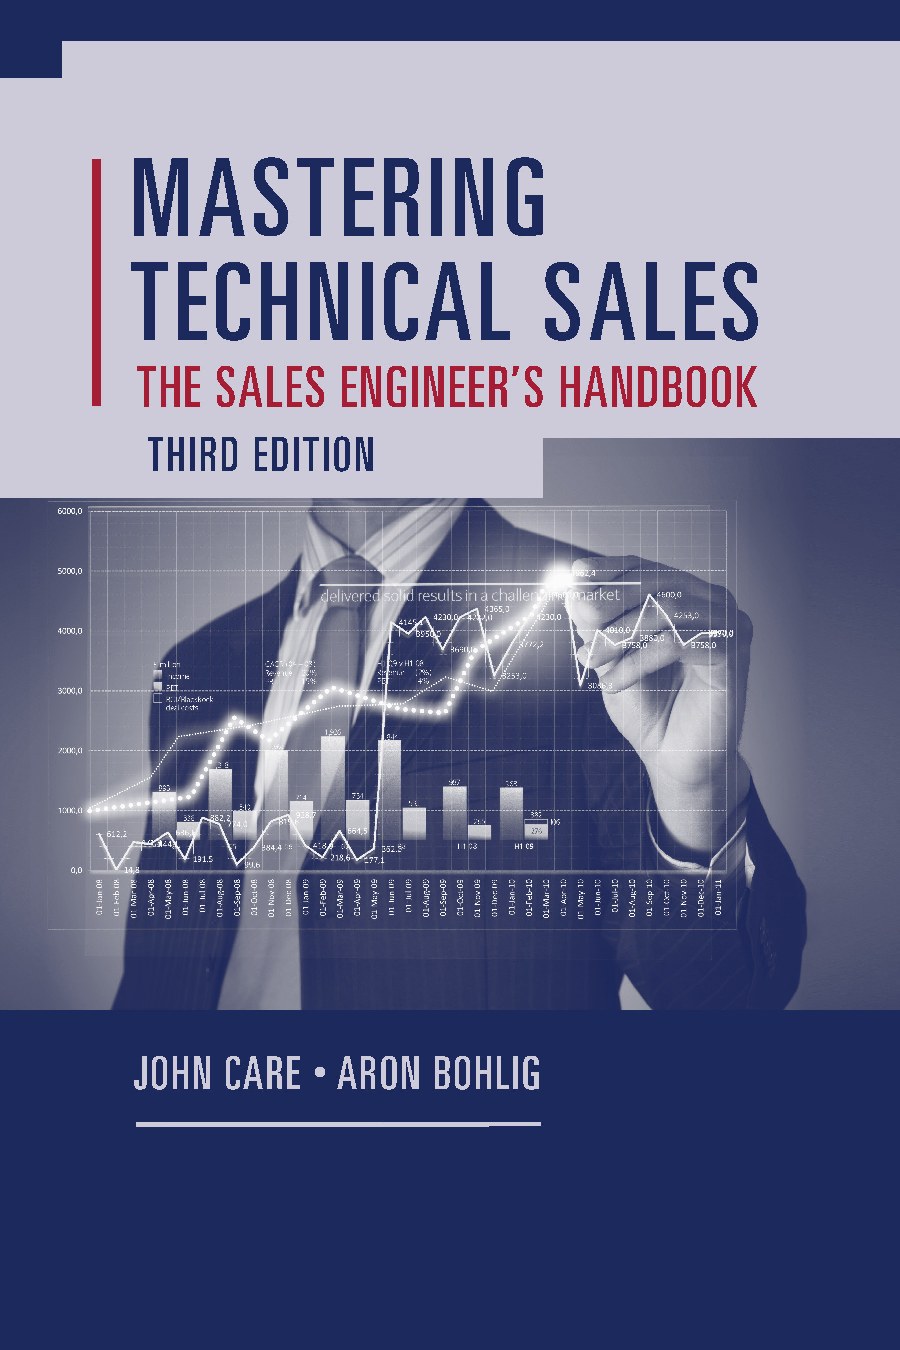 Mastering Technical Sales The Sales Engineer’s Handbook, Third Edition